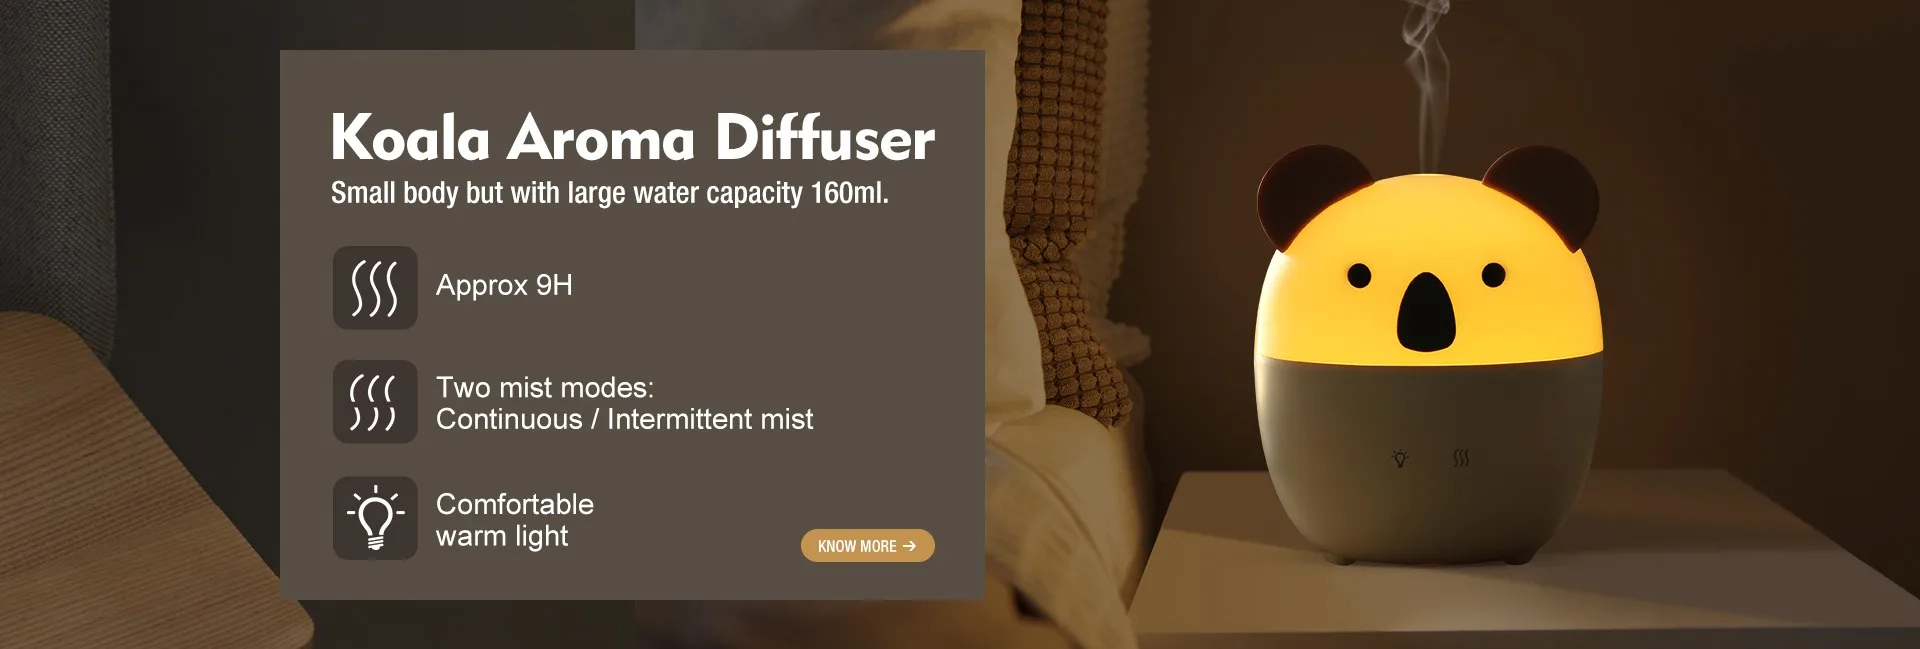 shenzhen-yohe-technology-co-ltd-aroma-diffuser-air-humidifier